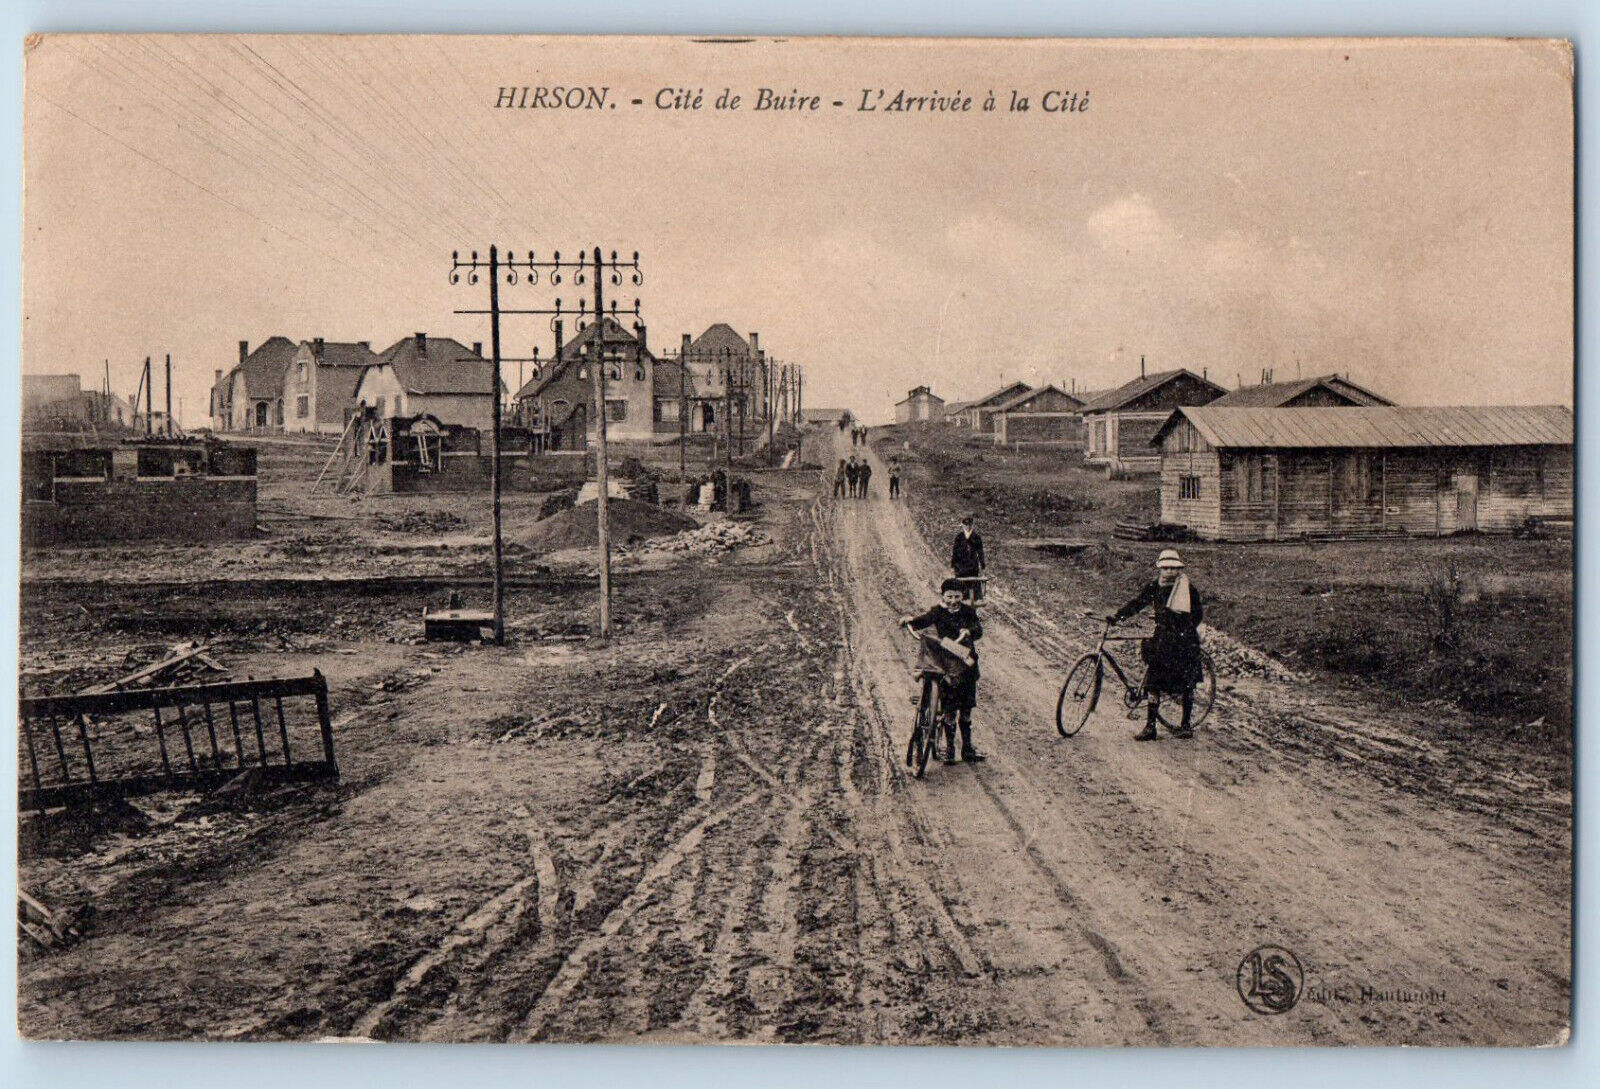 Hirson Hauts-de-France France Postcard City of Buire Arrival at the City c1910